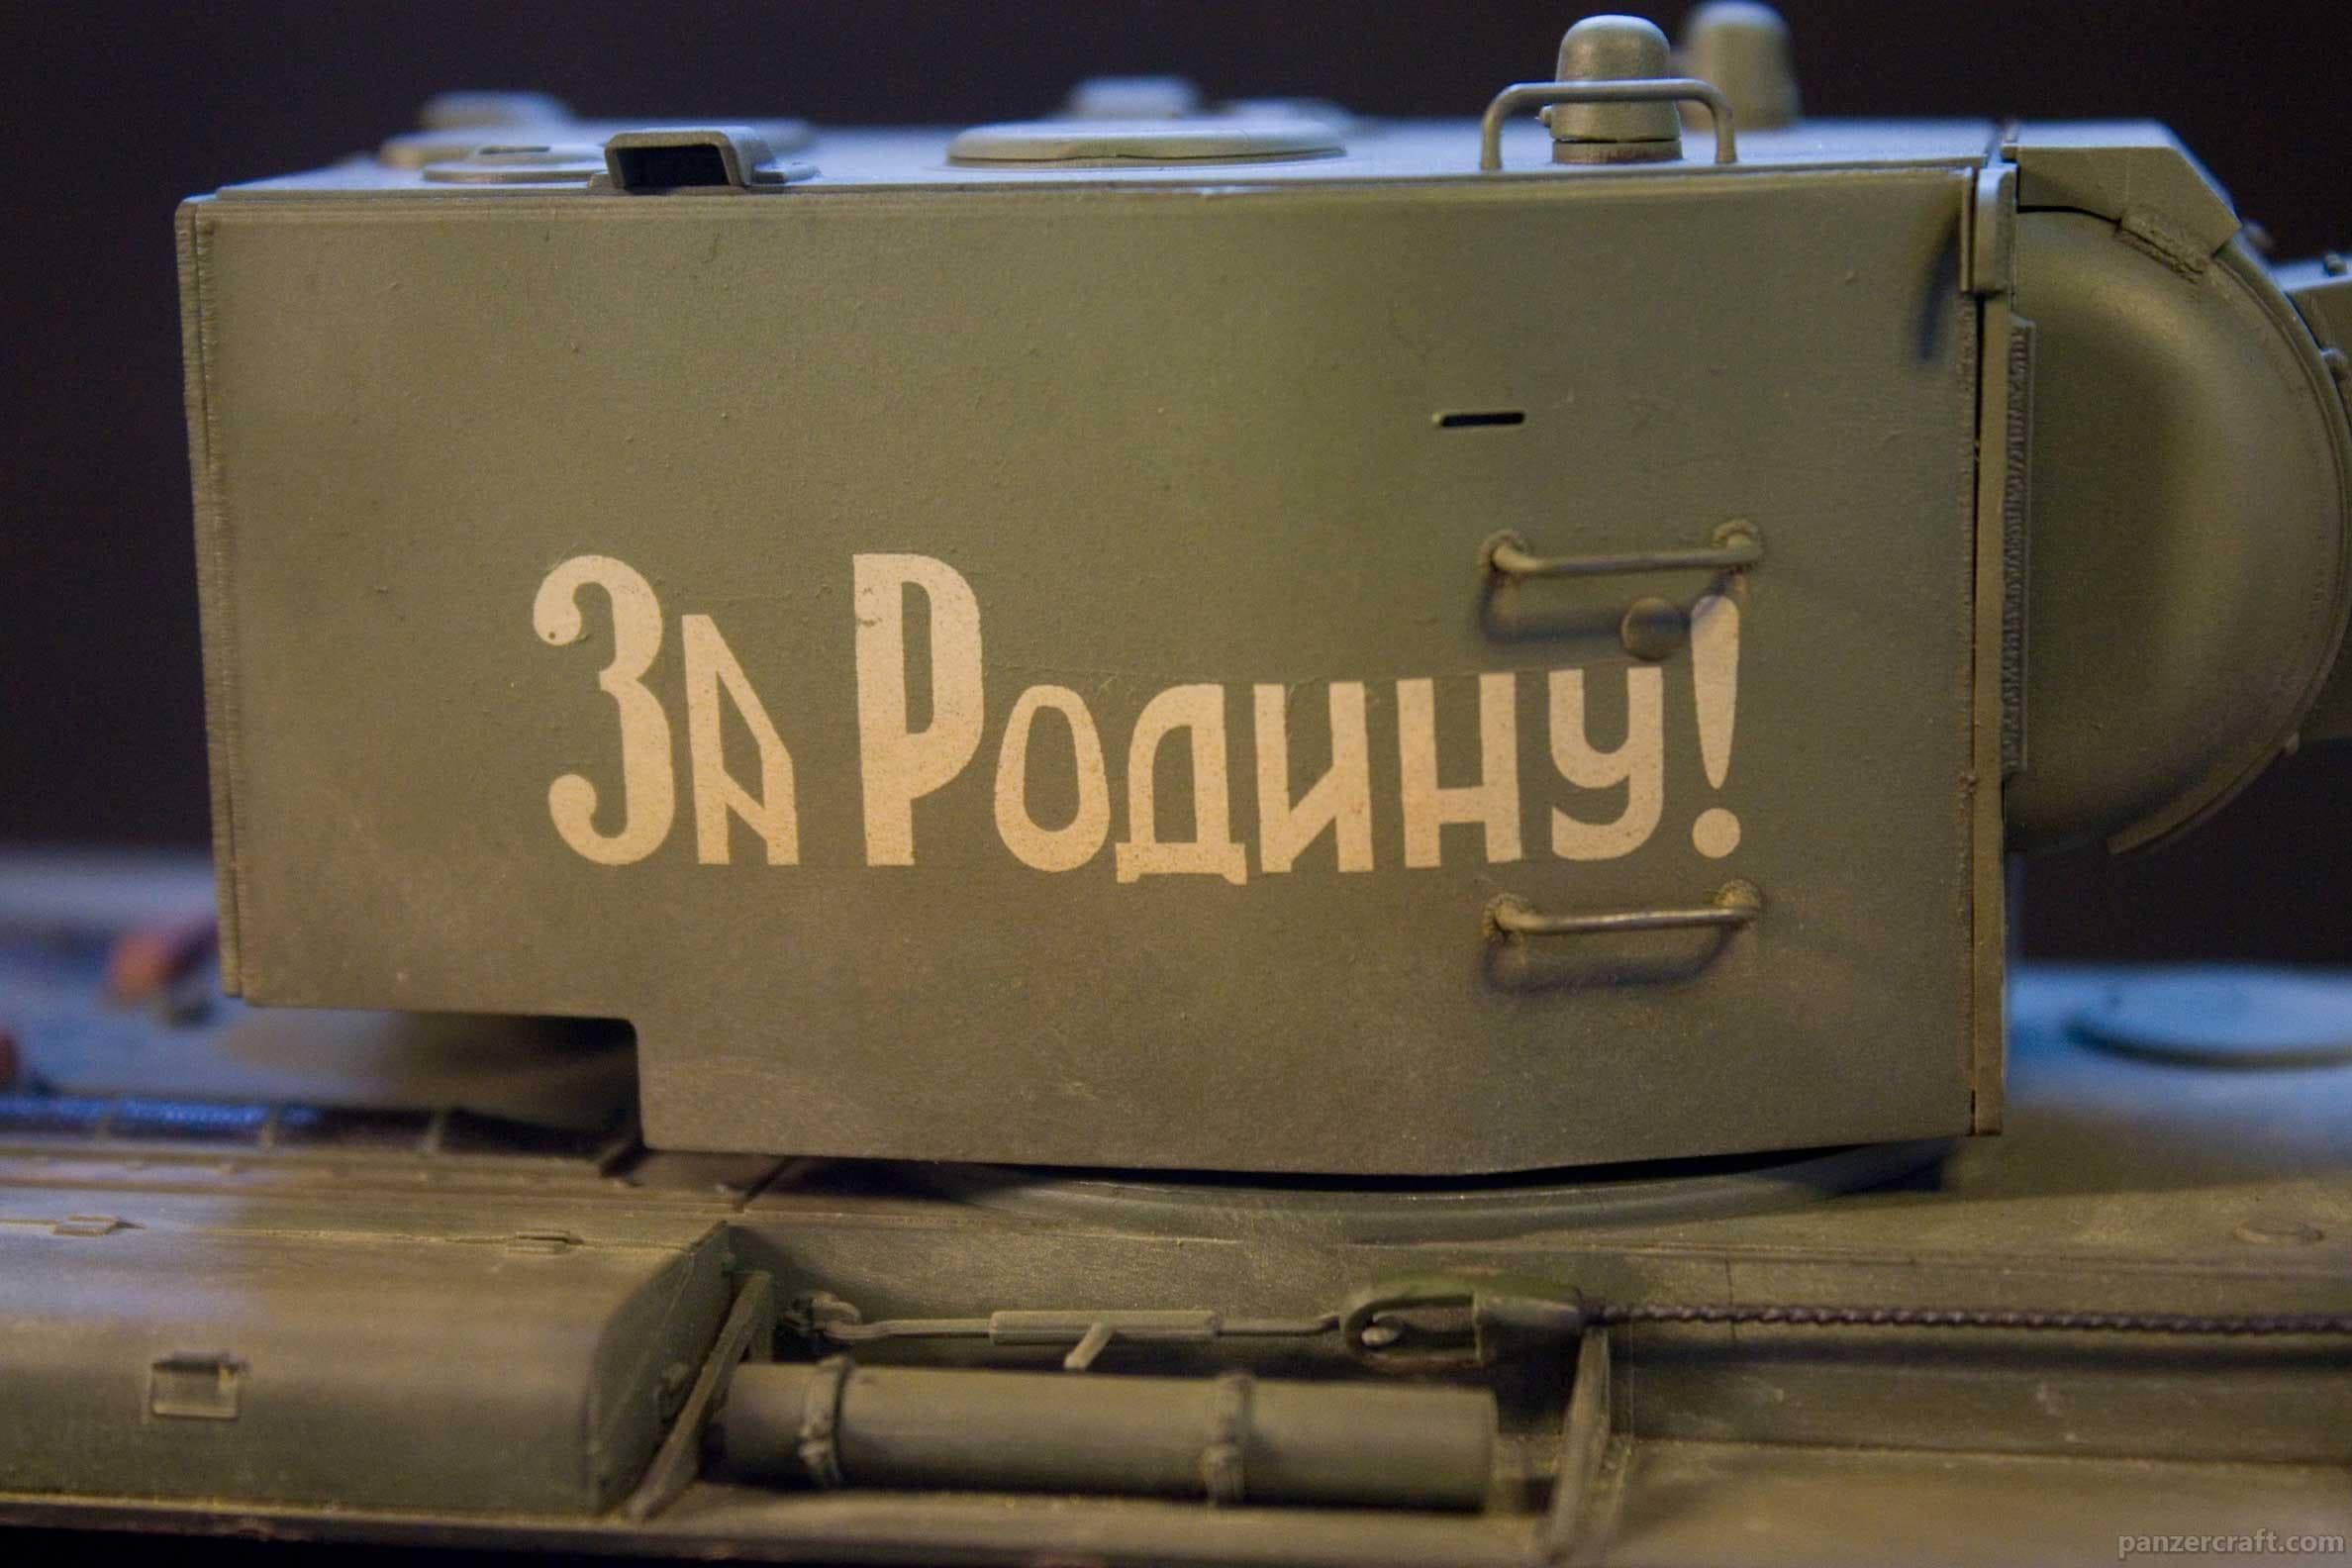 KV-2 - It says, 